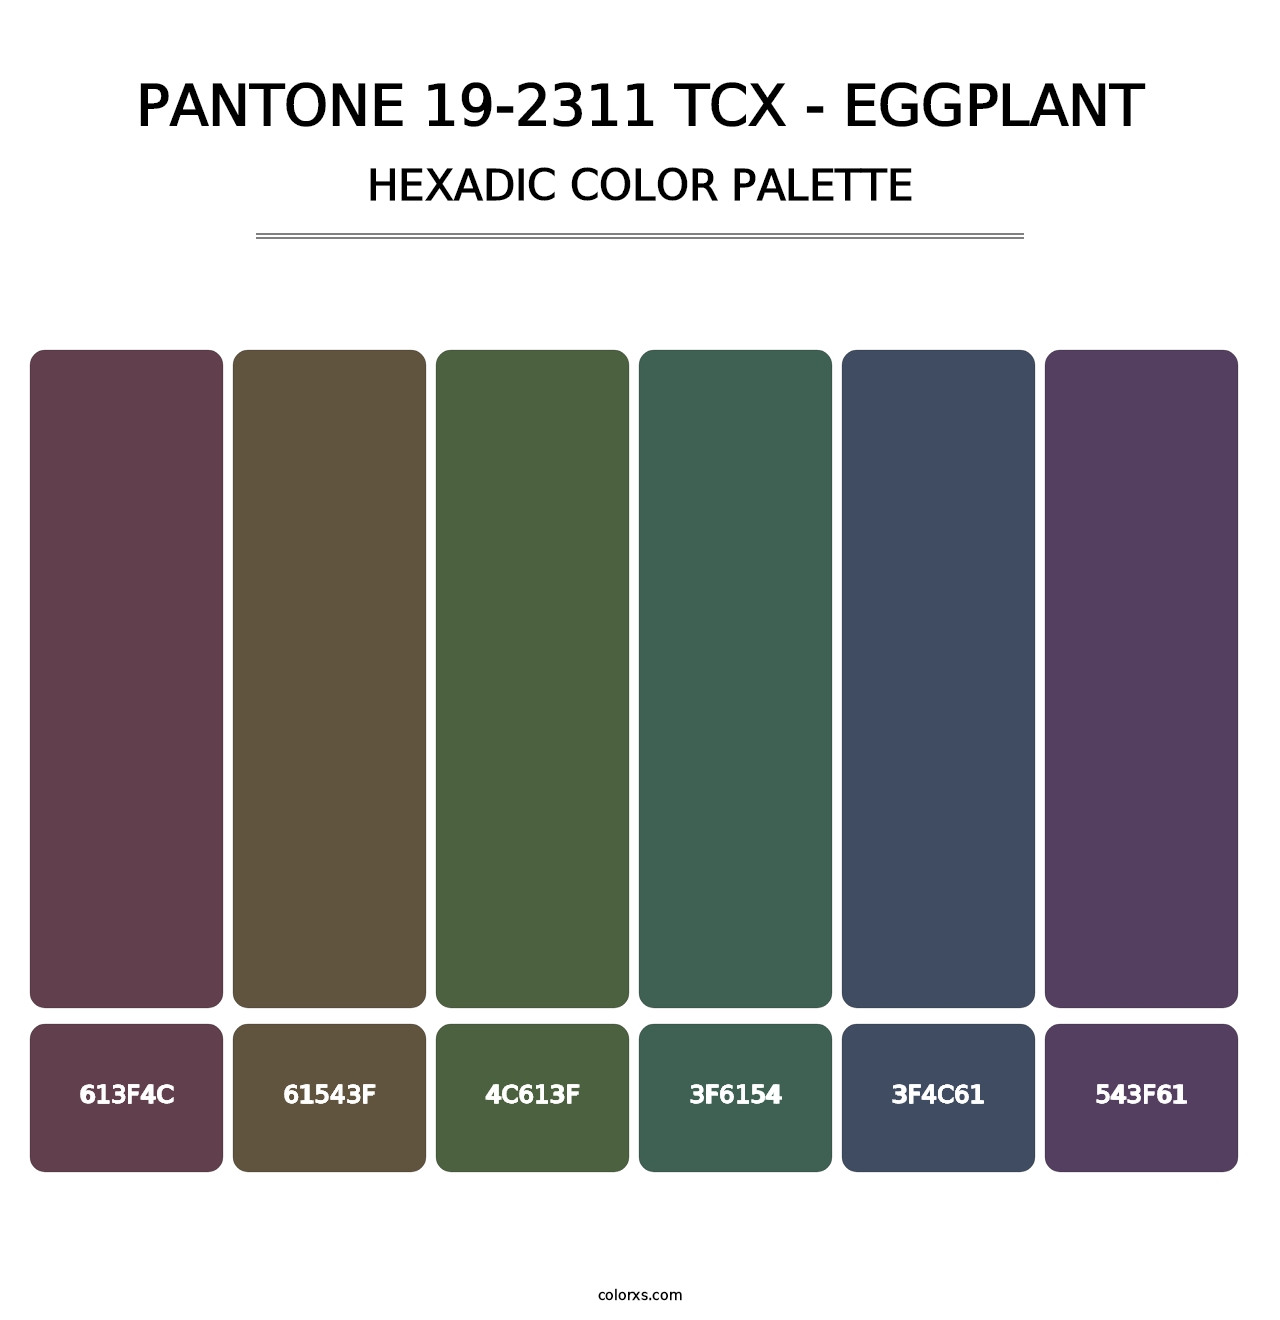 PANTONE 19-2311 TCX - Eggplant - Hexadic Color Palette